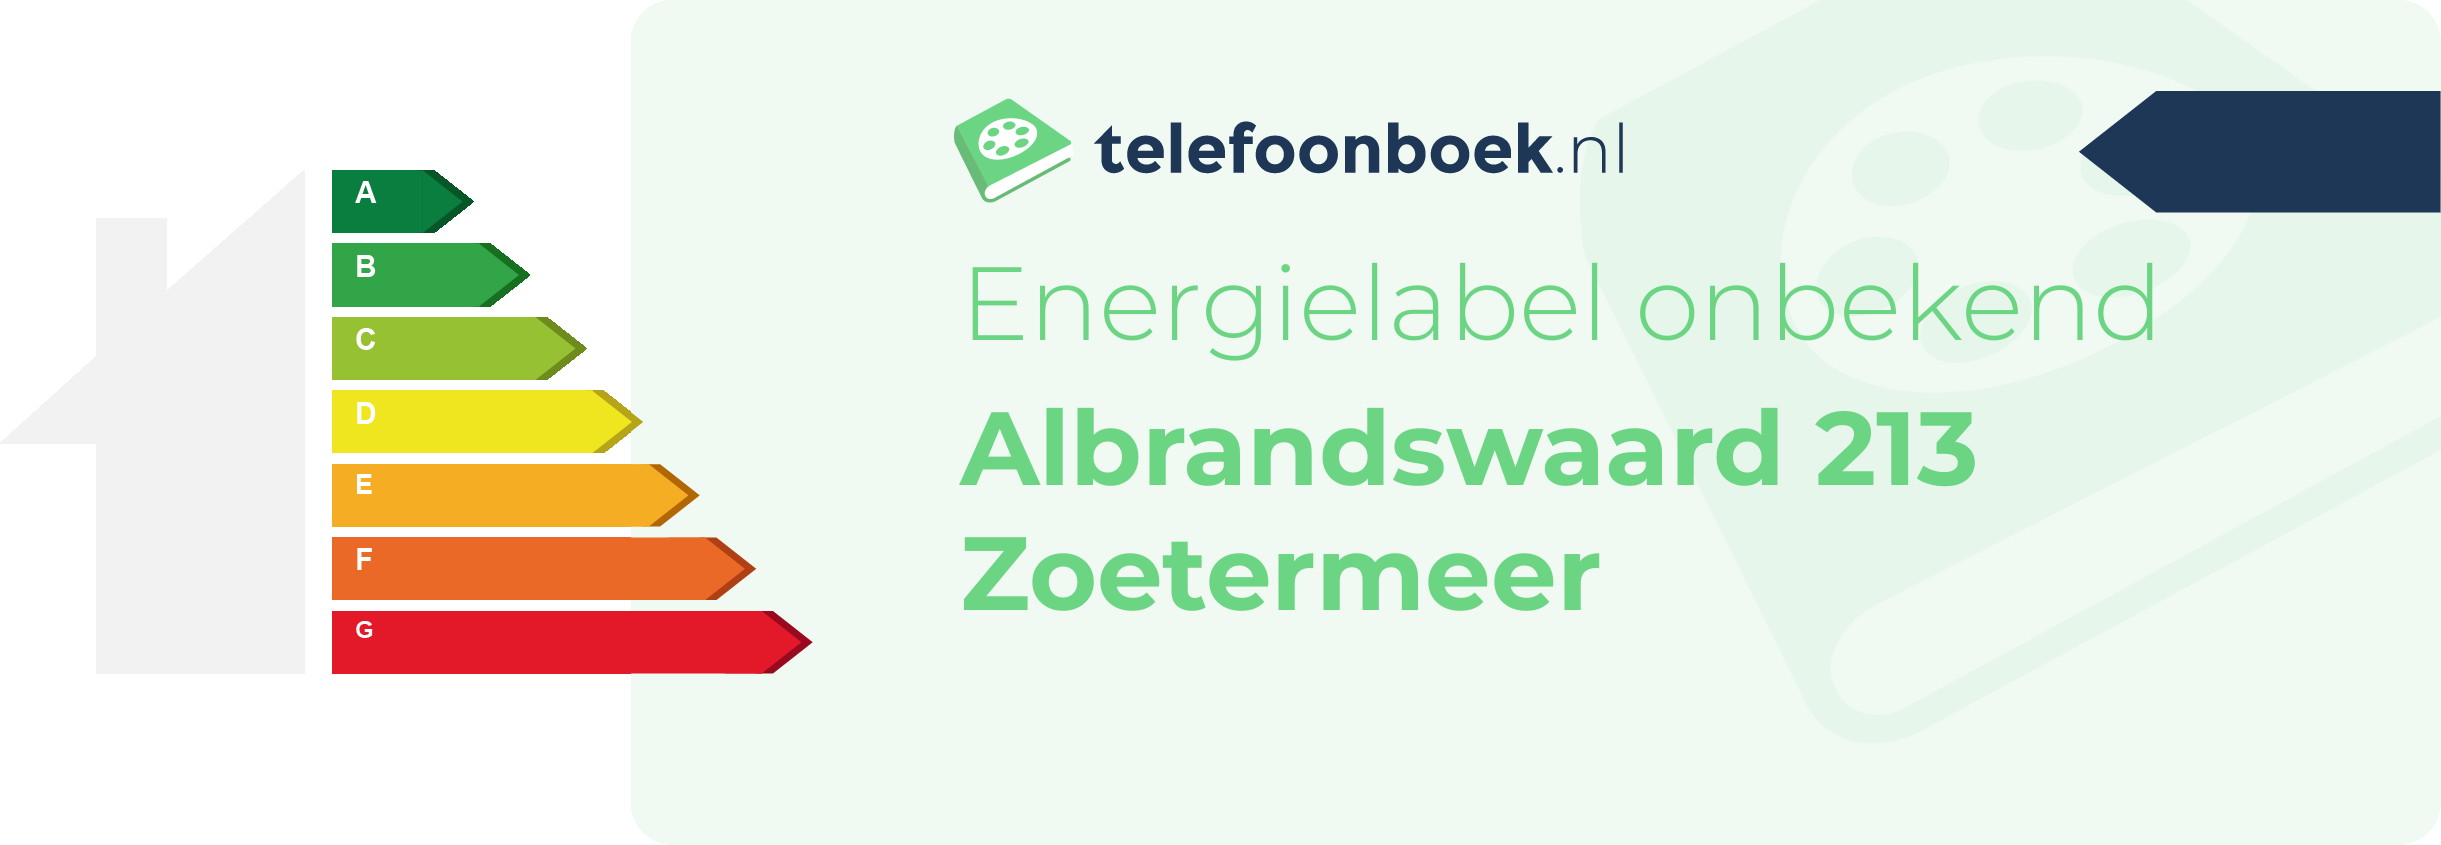 Energielabel Albrandswaard 213 Zoetermeer